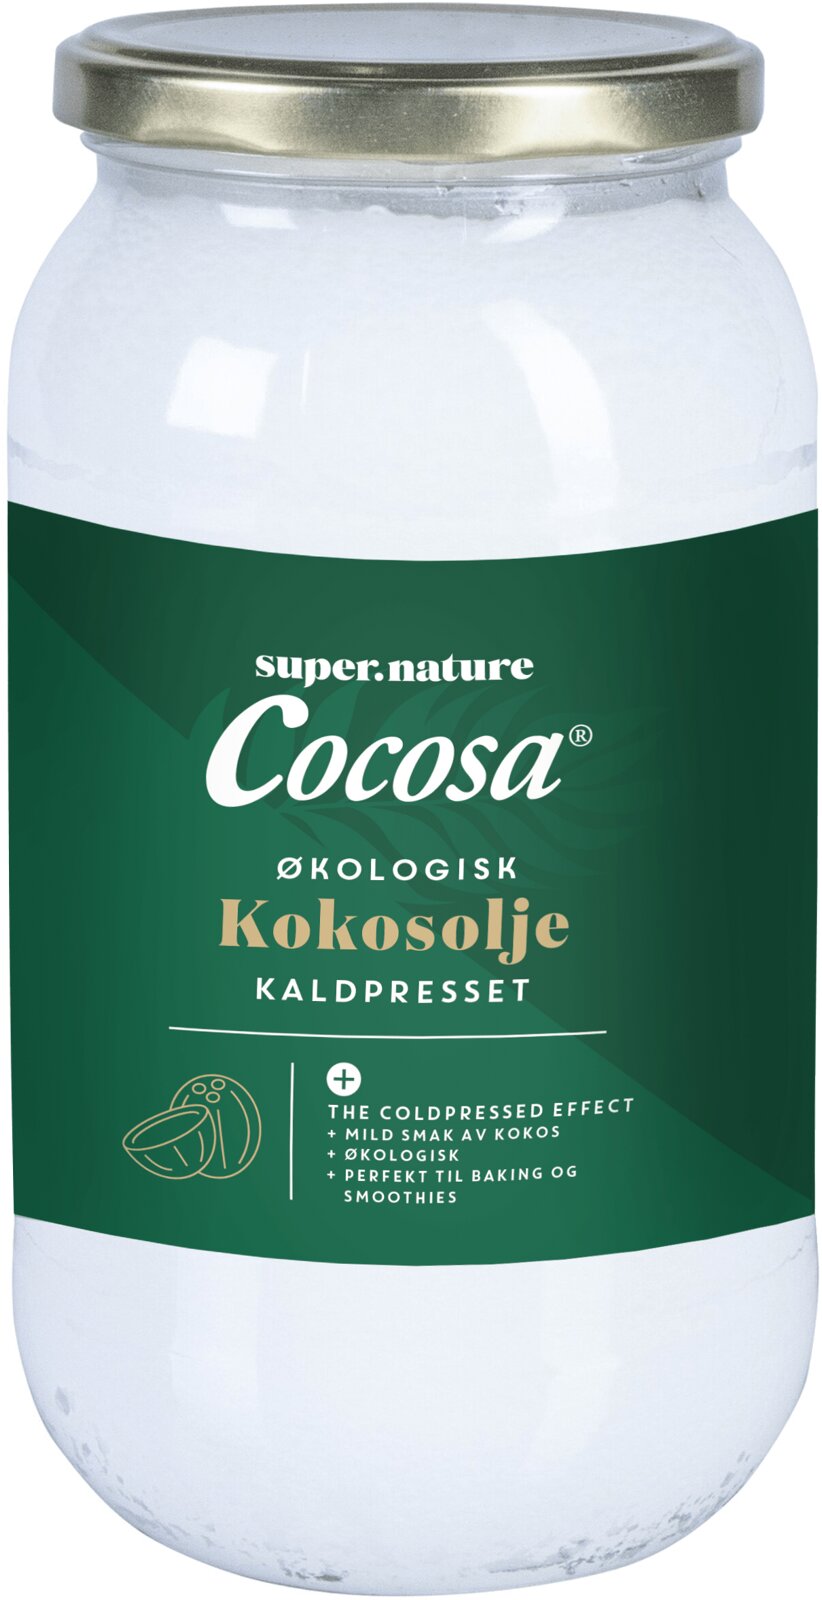 Supernature Cocosa Extra Virgin Kokosolje